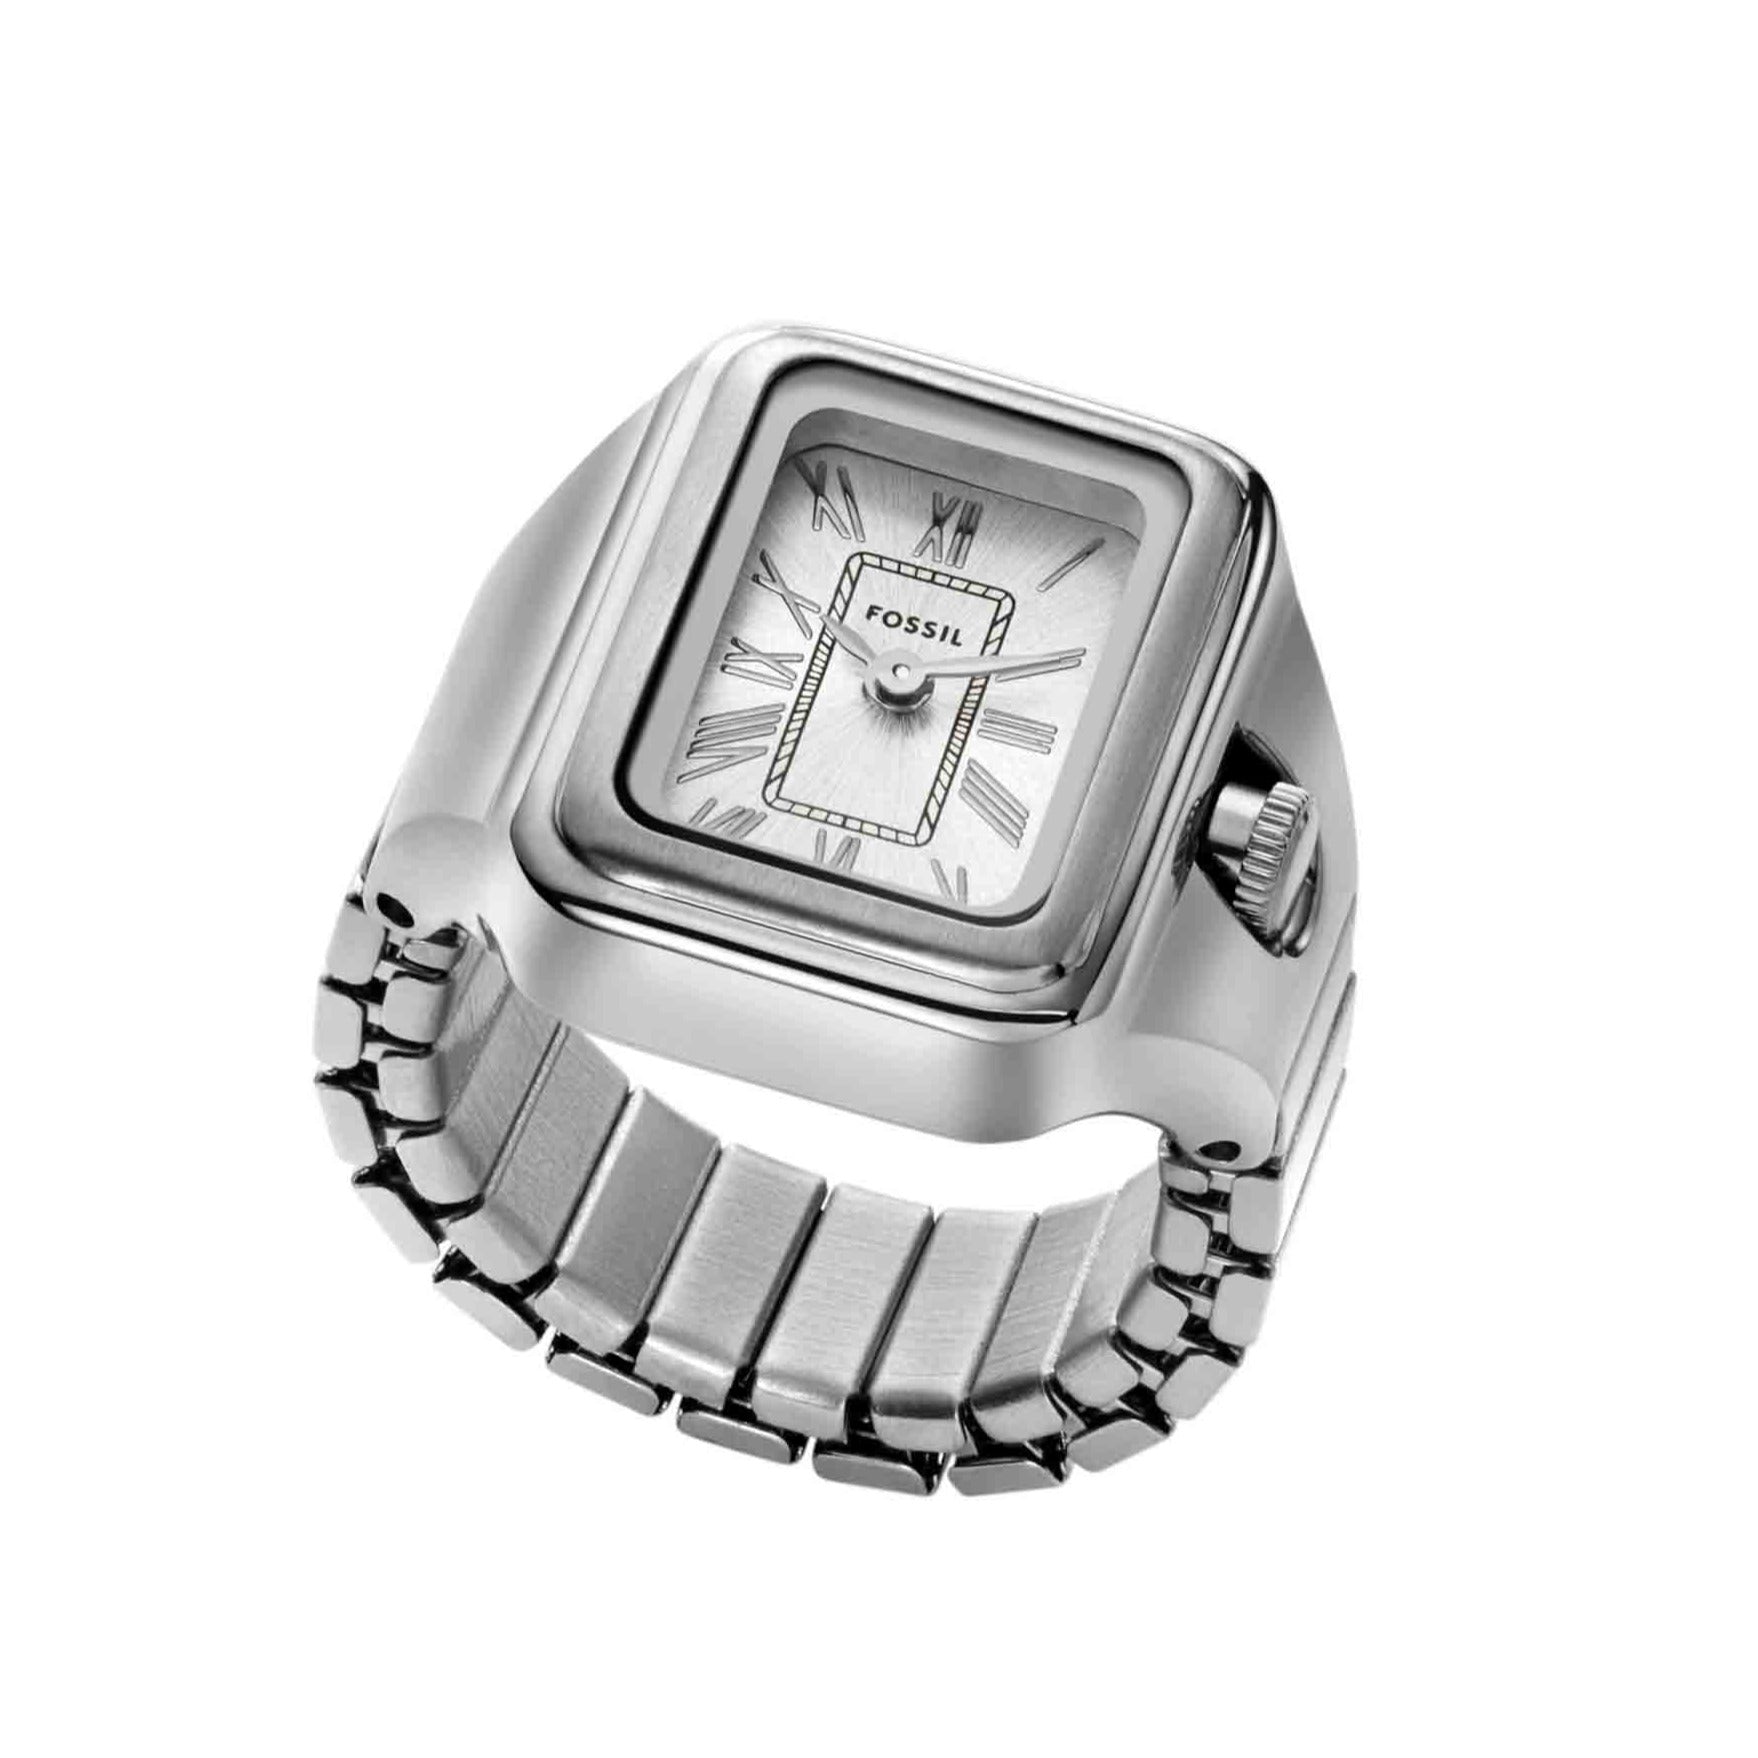 Fossil ES5321 - Watch Ring Watch • Watchard.com